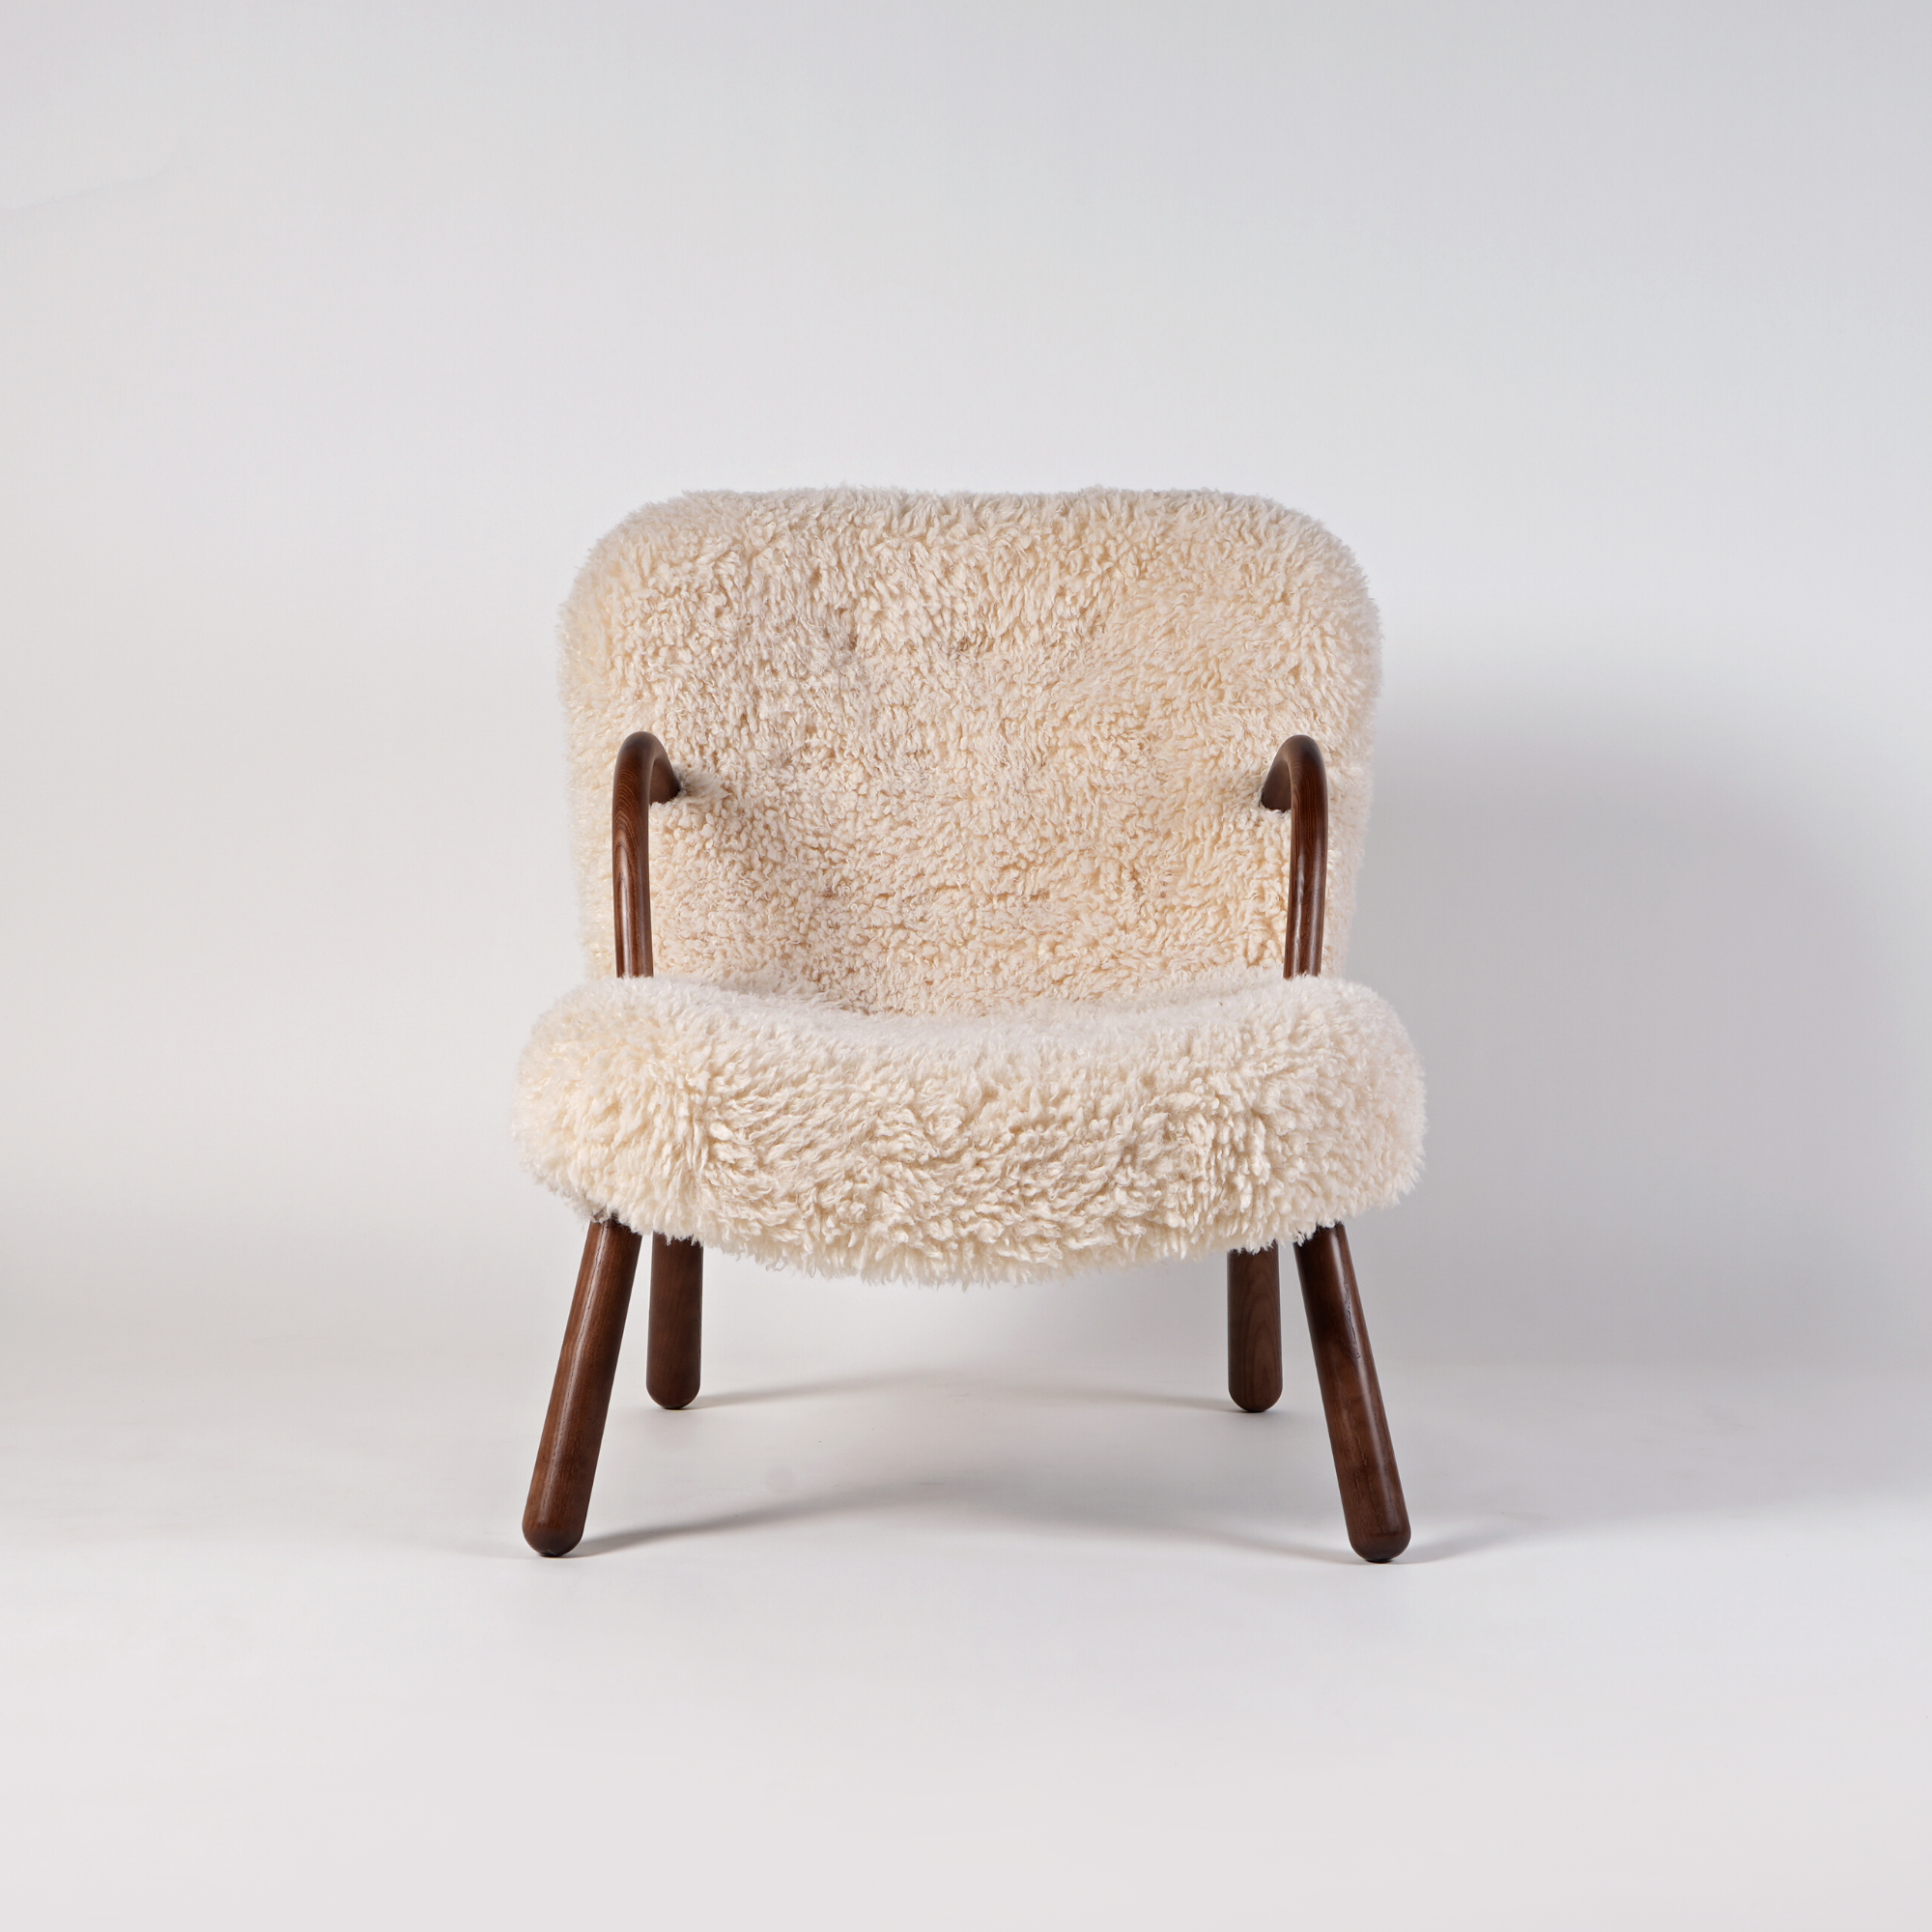 Replica Philip Arctander Sheepskin Clam Chair (Palourde Armchair)